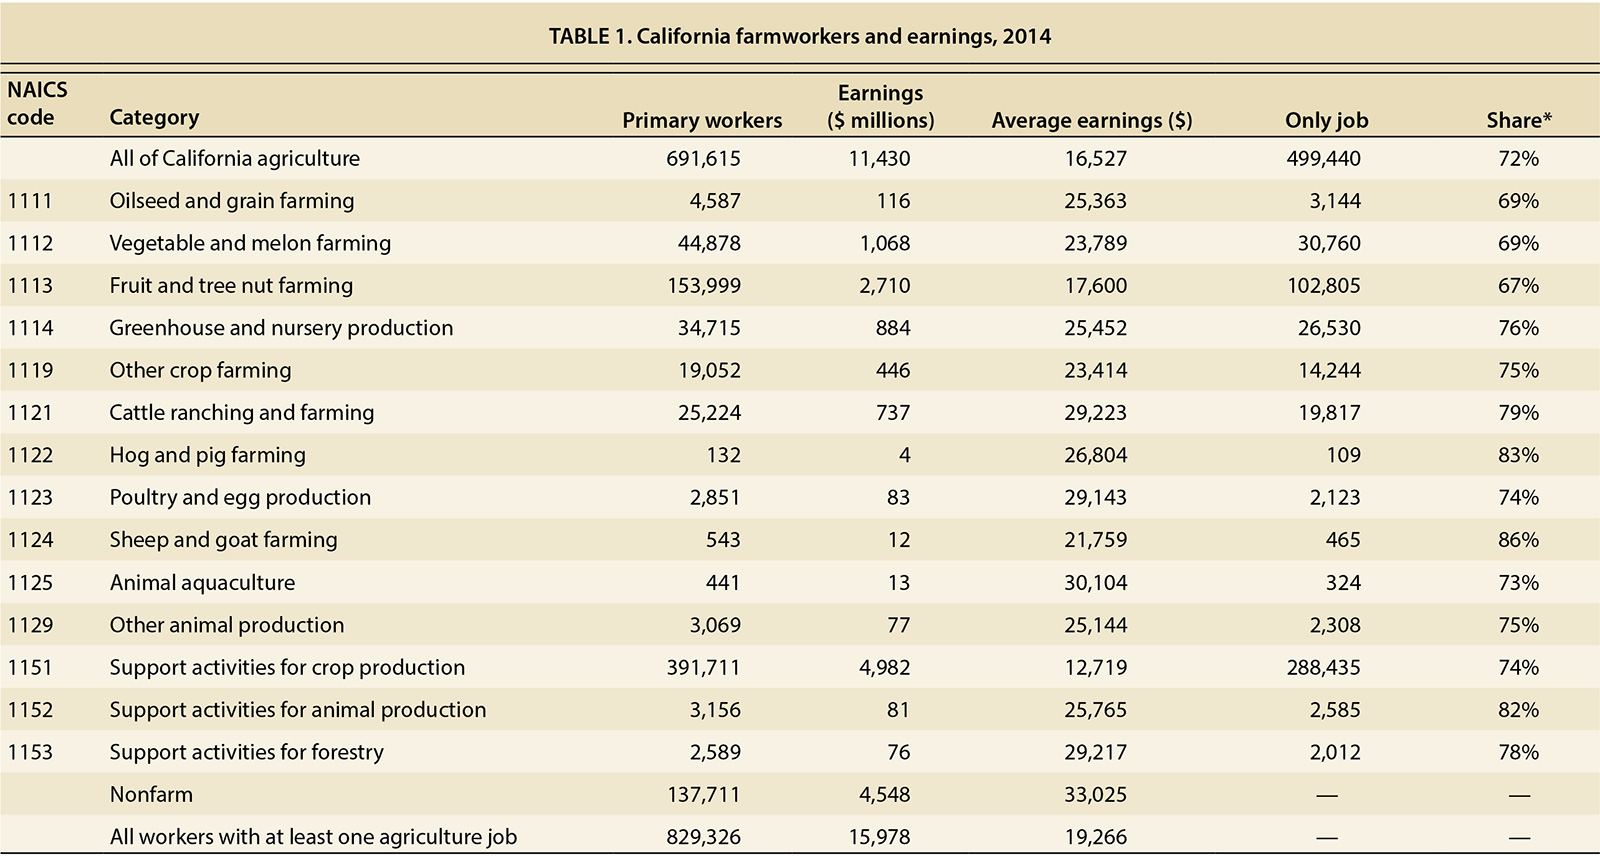 California farmworkers and earnings, 2014